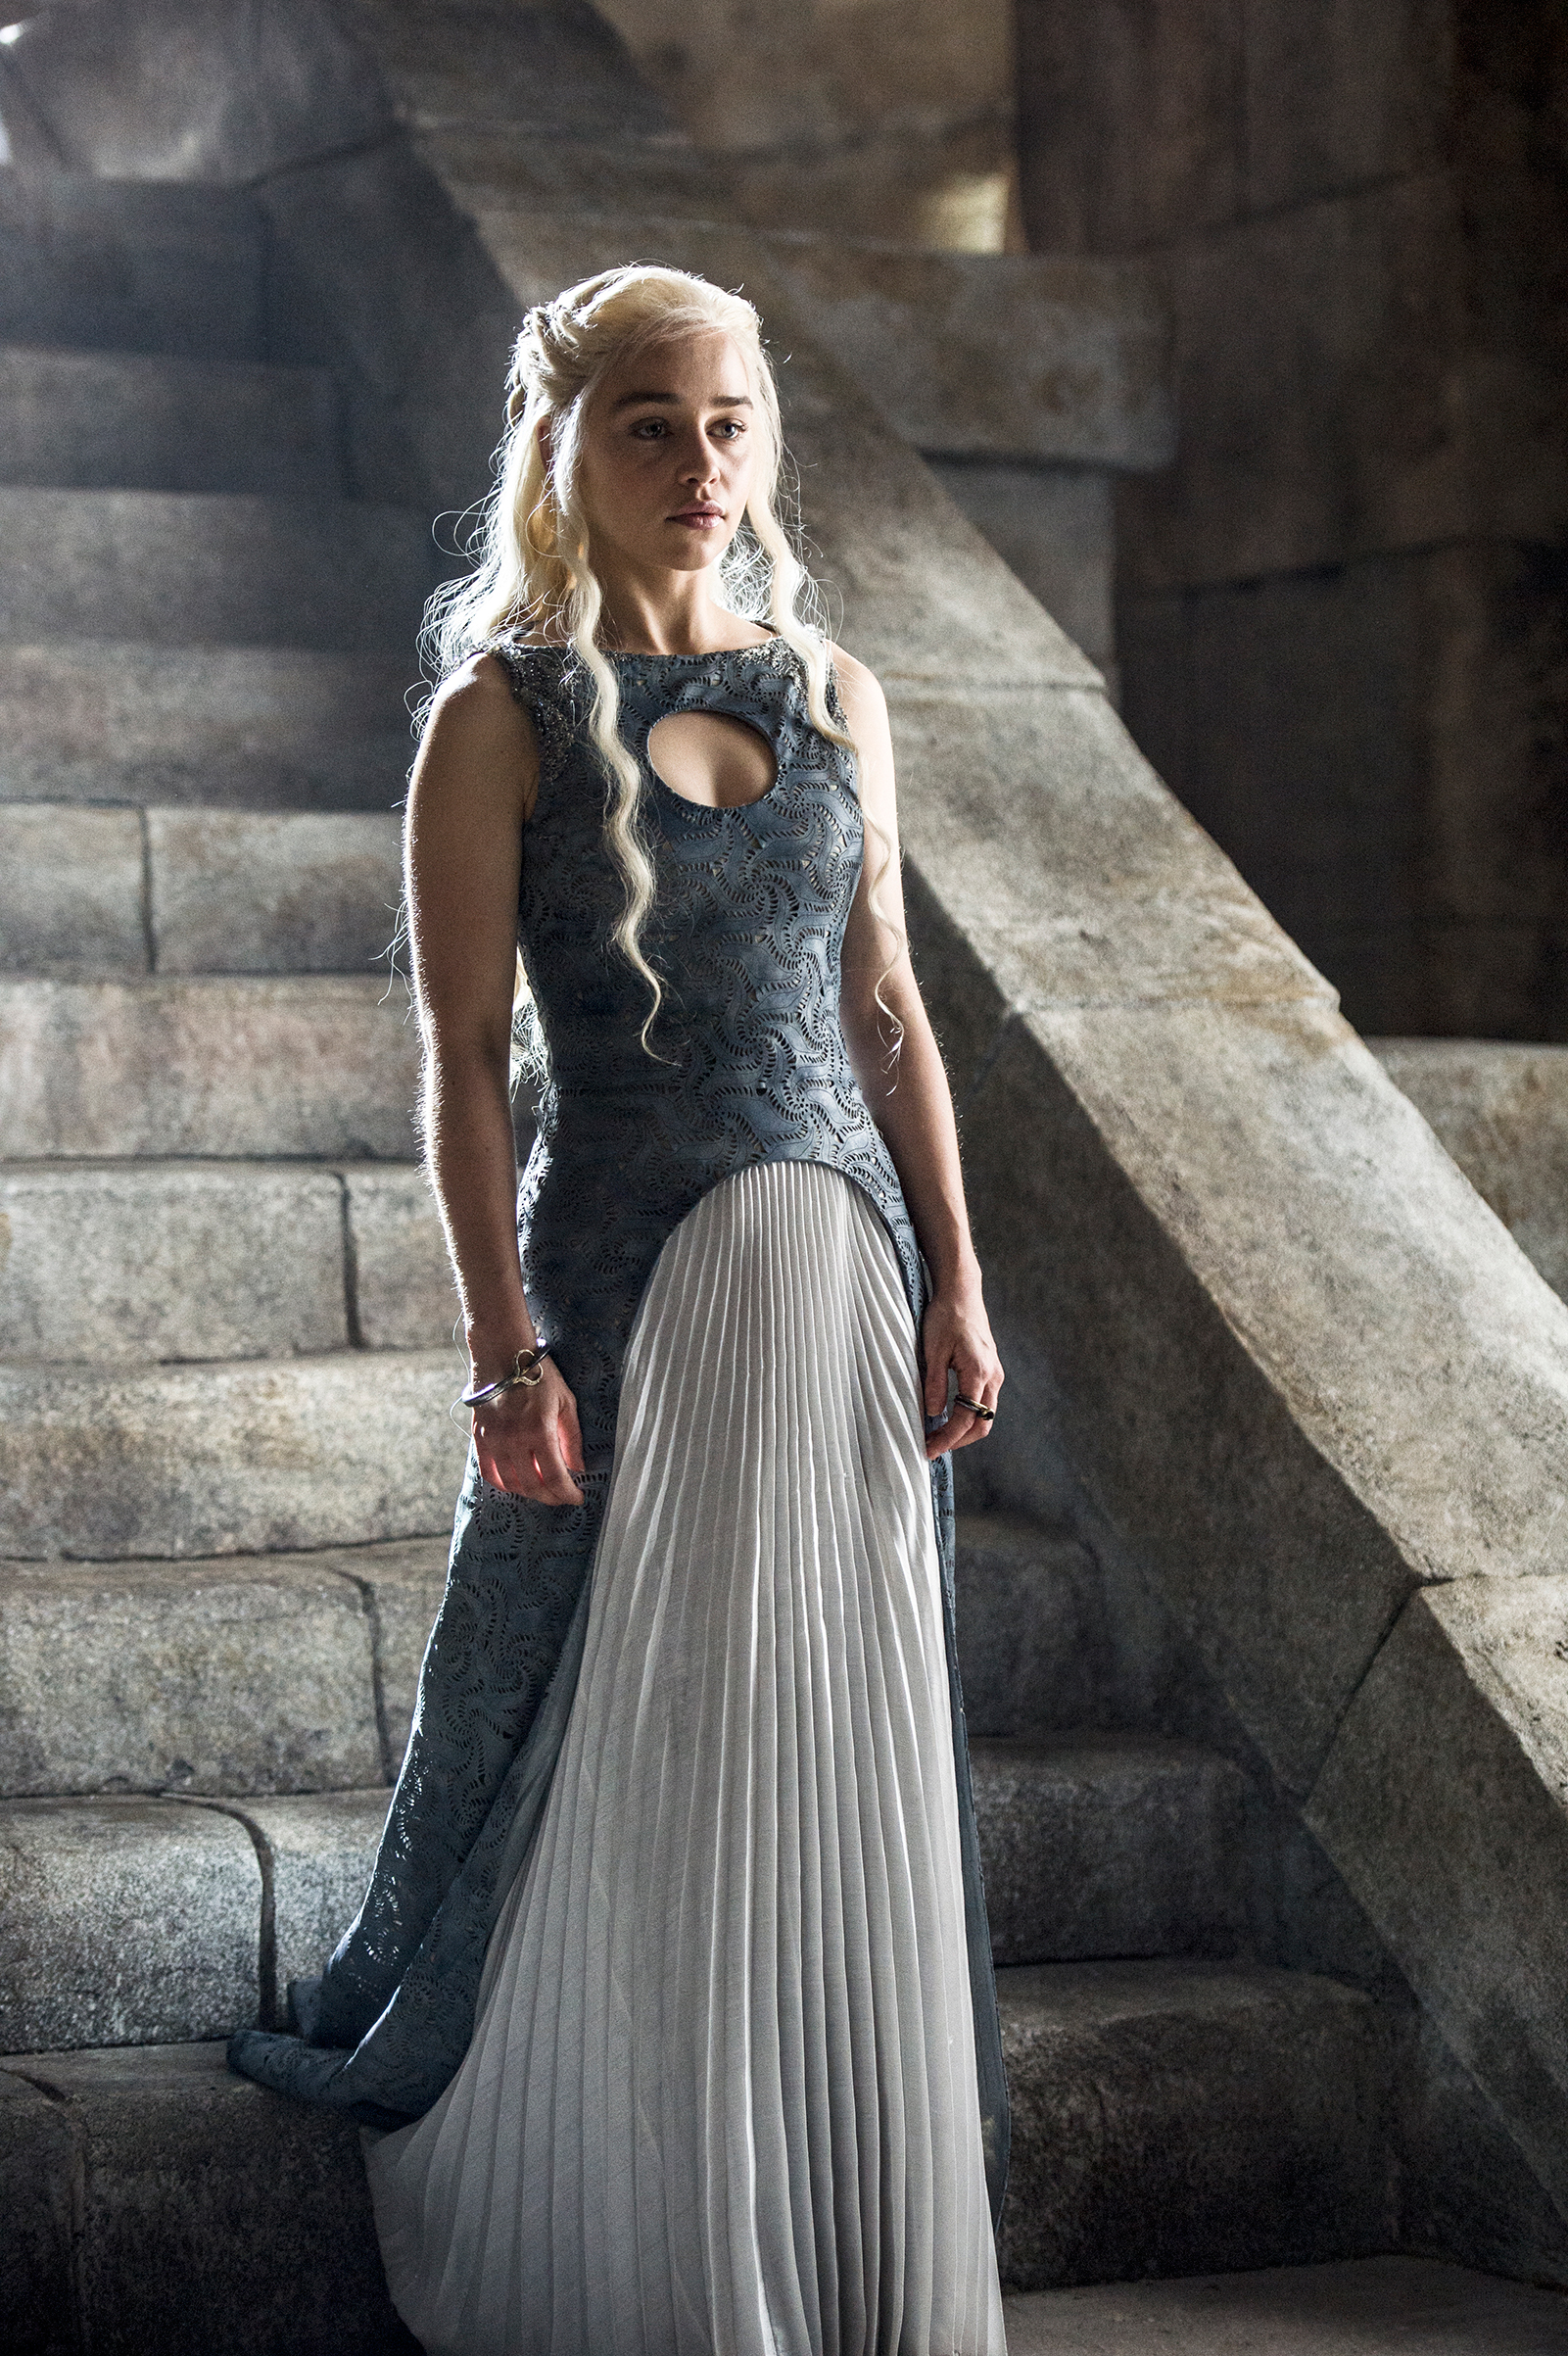 filete Plata Punto muerto Game of Thrones: Daenerys Targaryen Costume Evolution Photos | Time